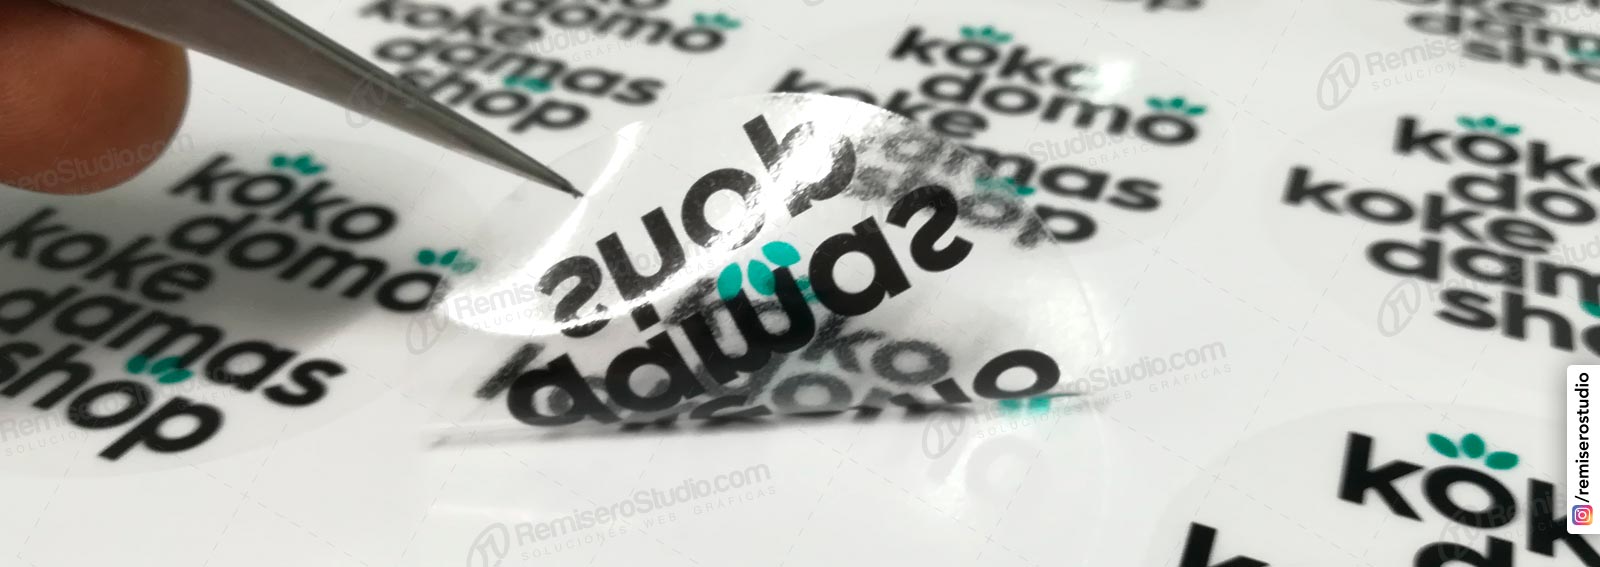 Stickers transparentes circulares